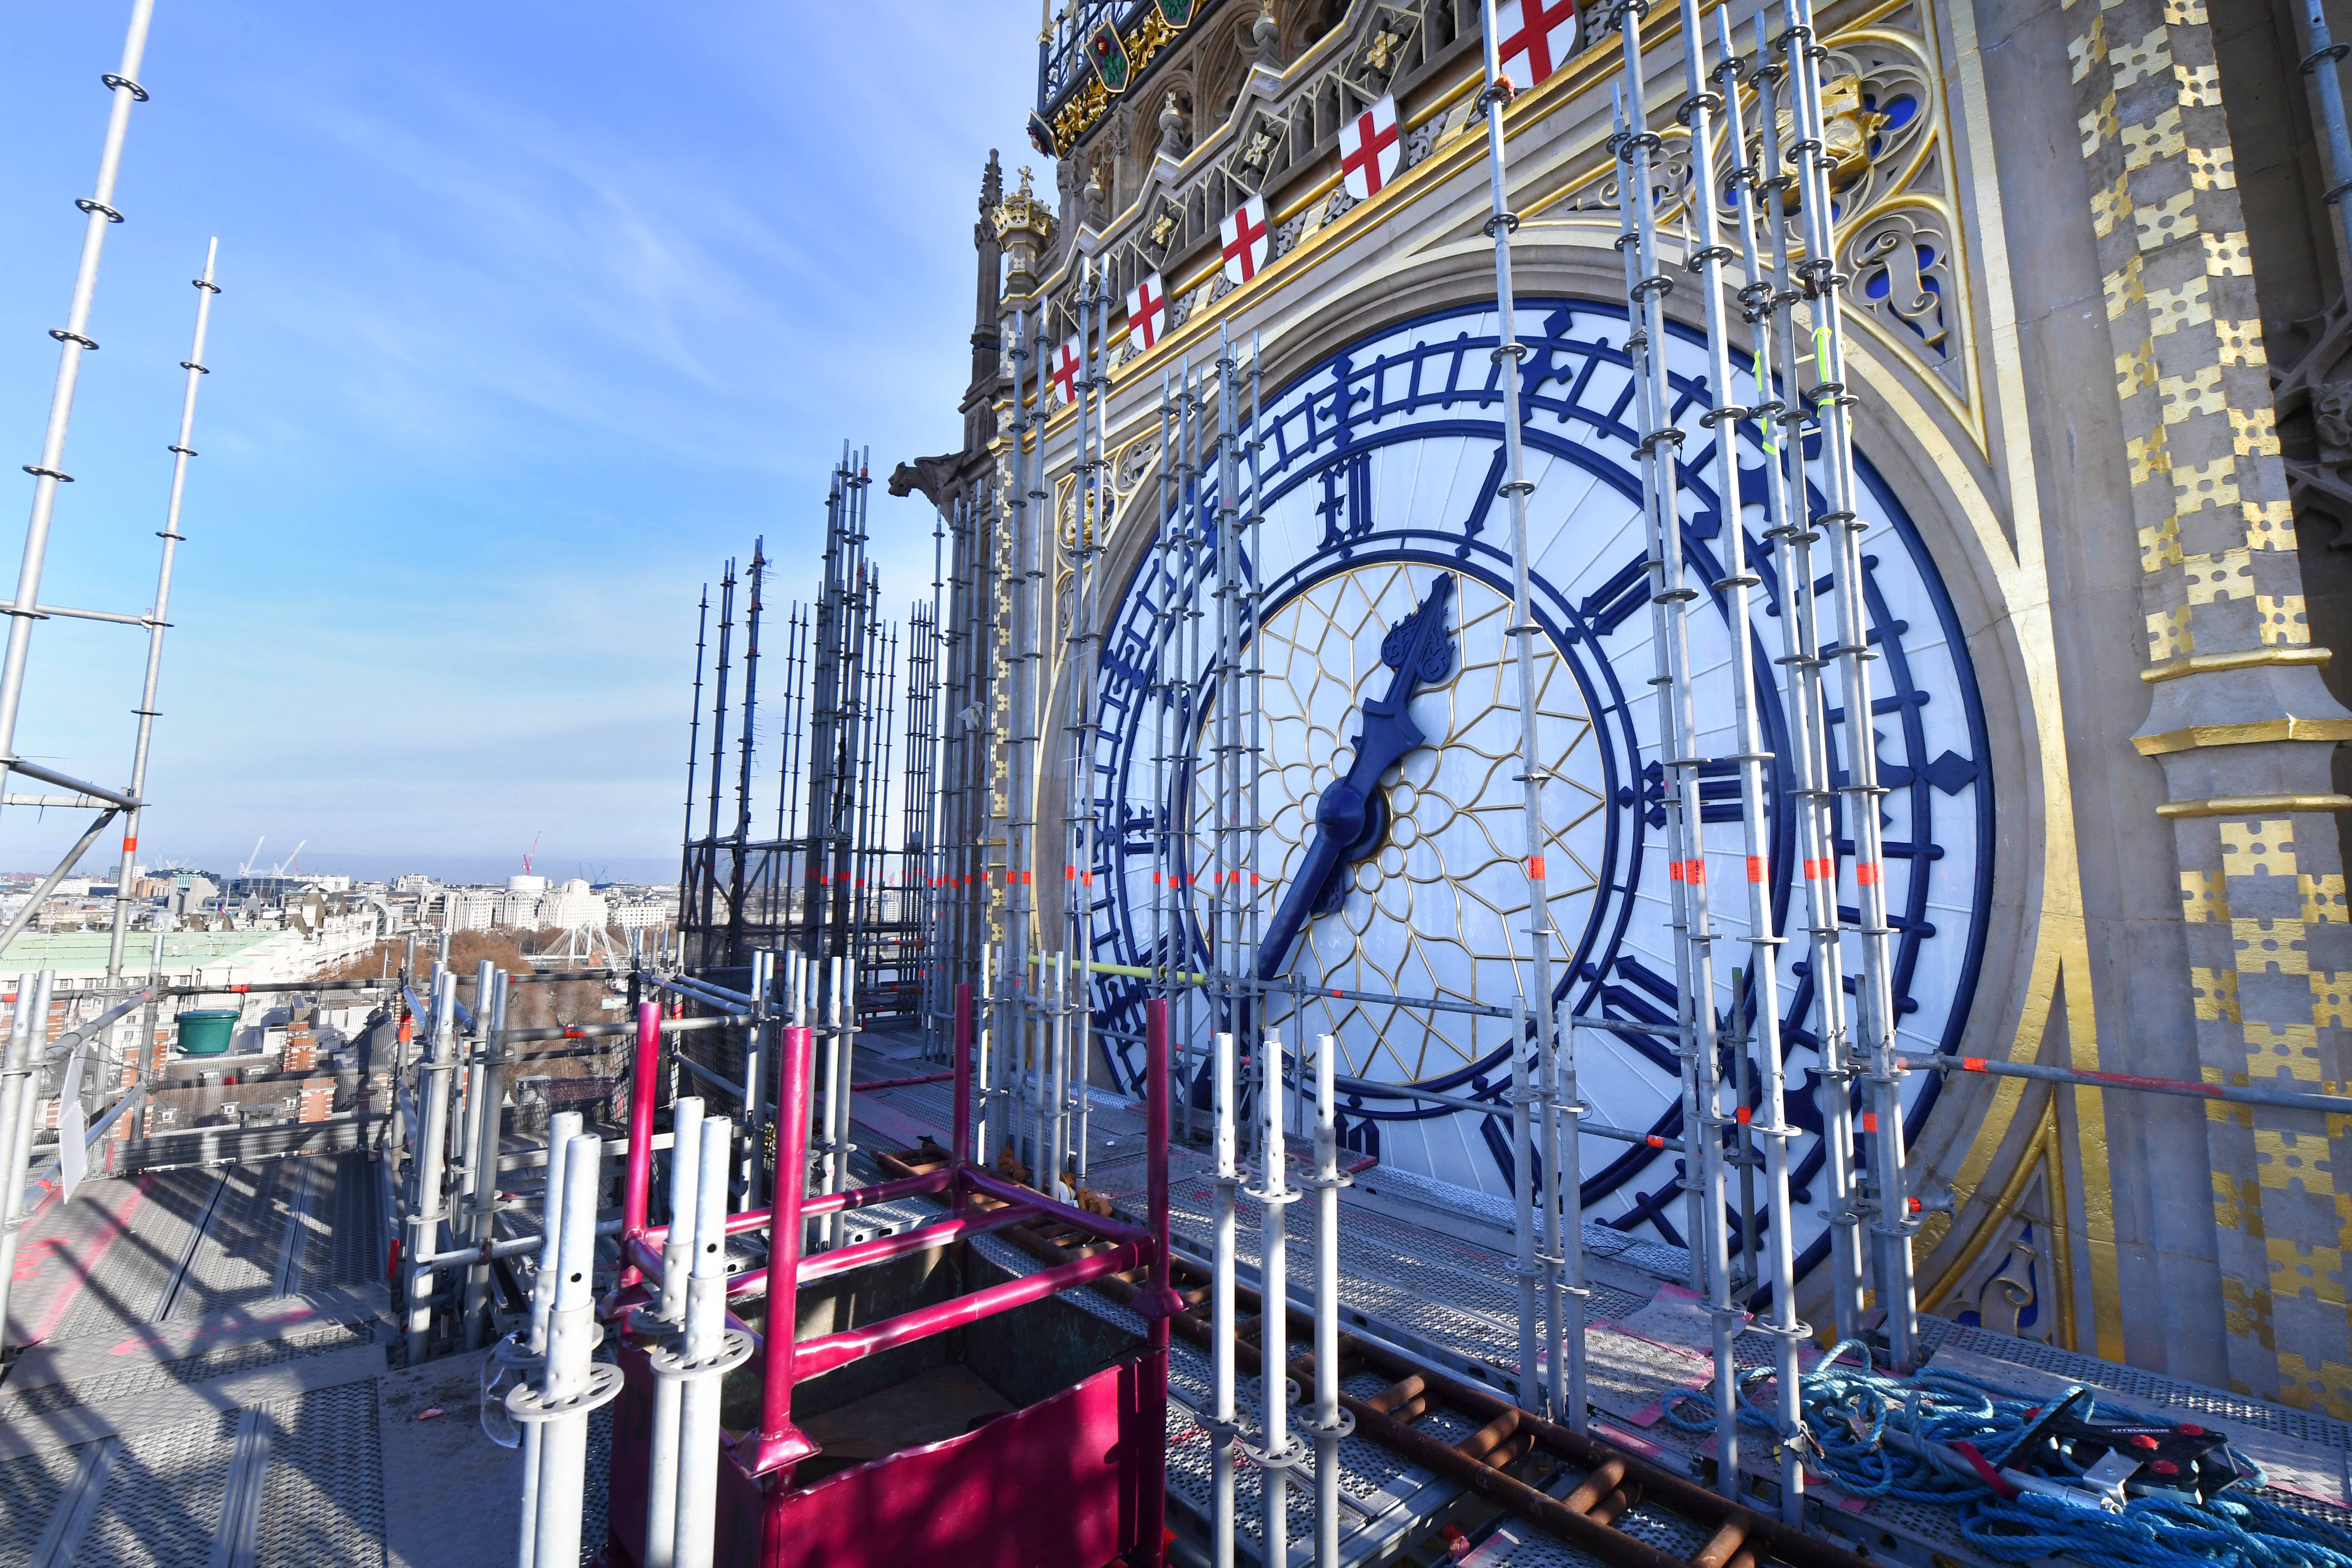 Elizabeth Tower clock face. Image credit ©UK Parliament Jessica Taylor